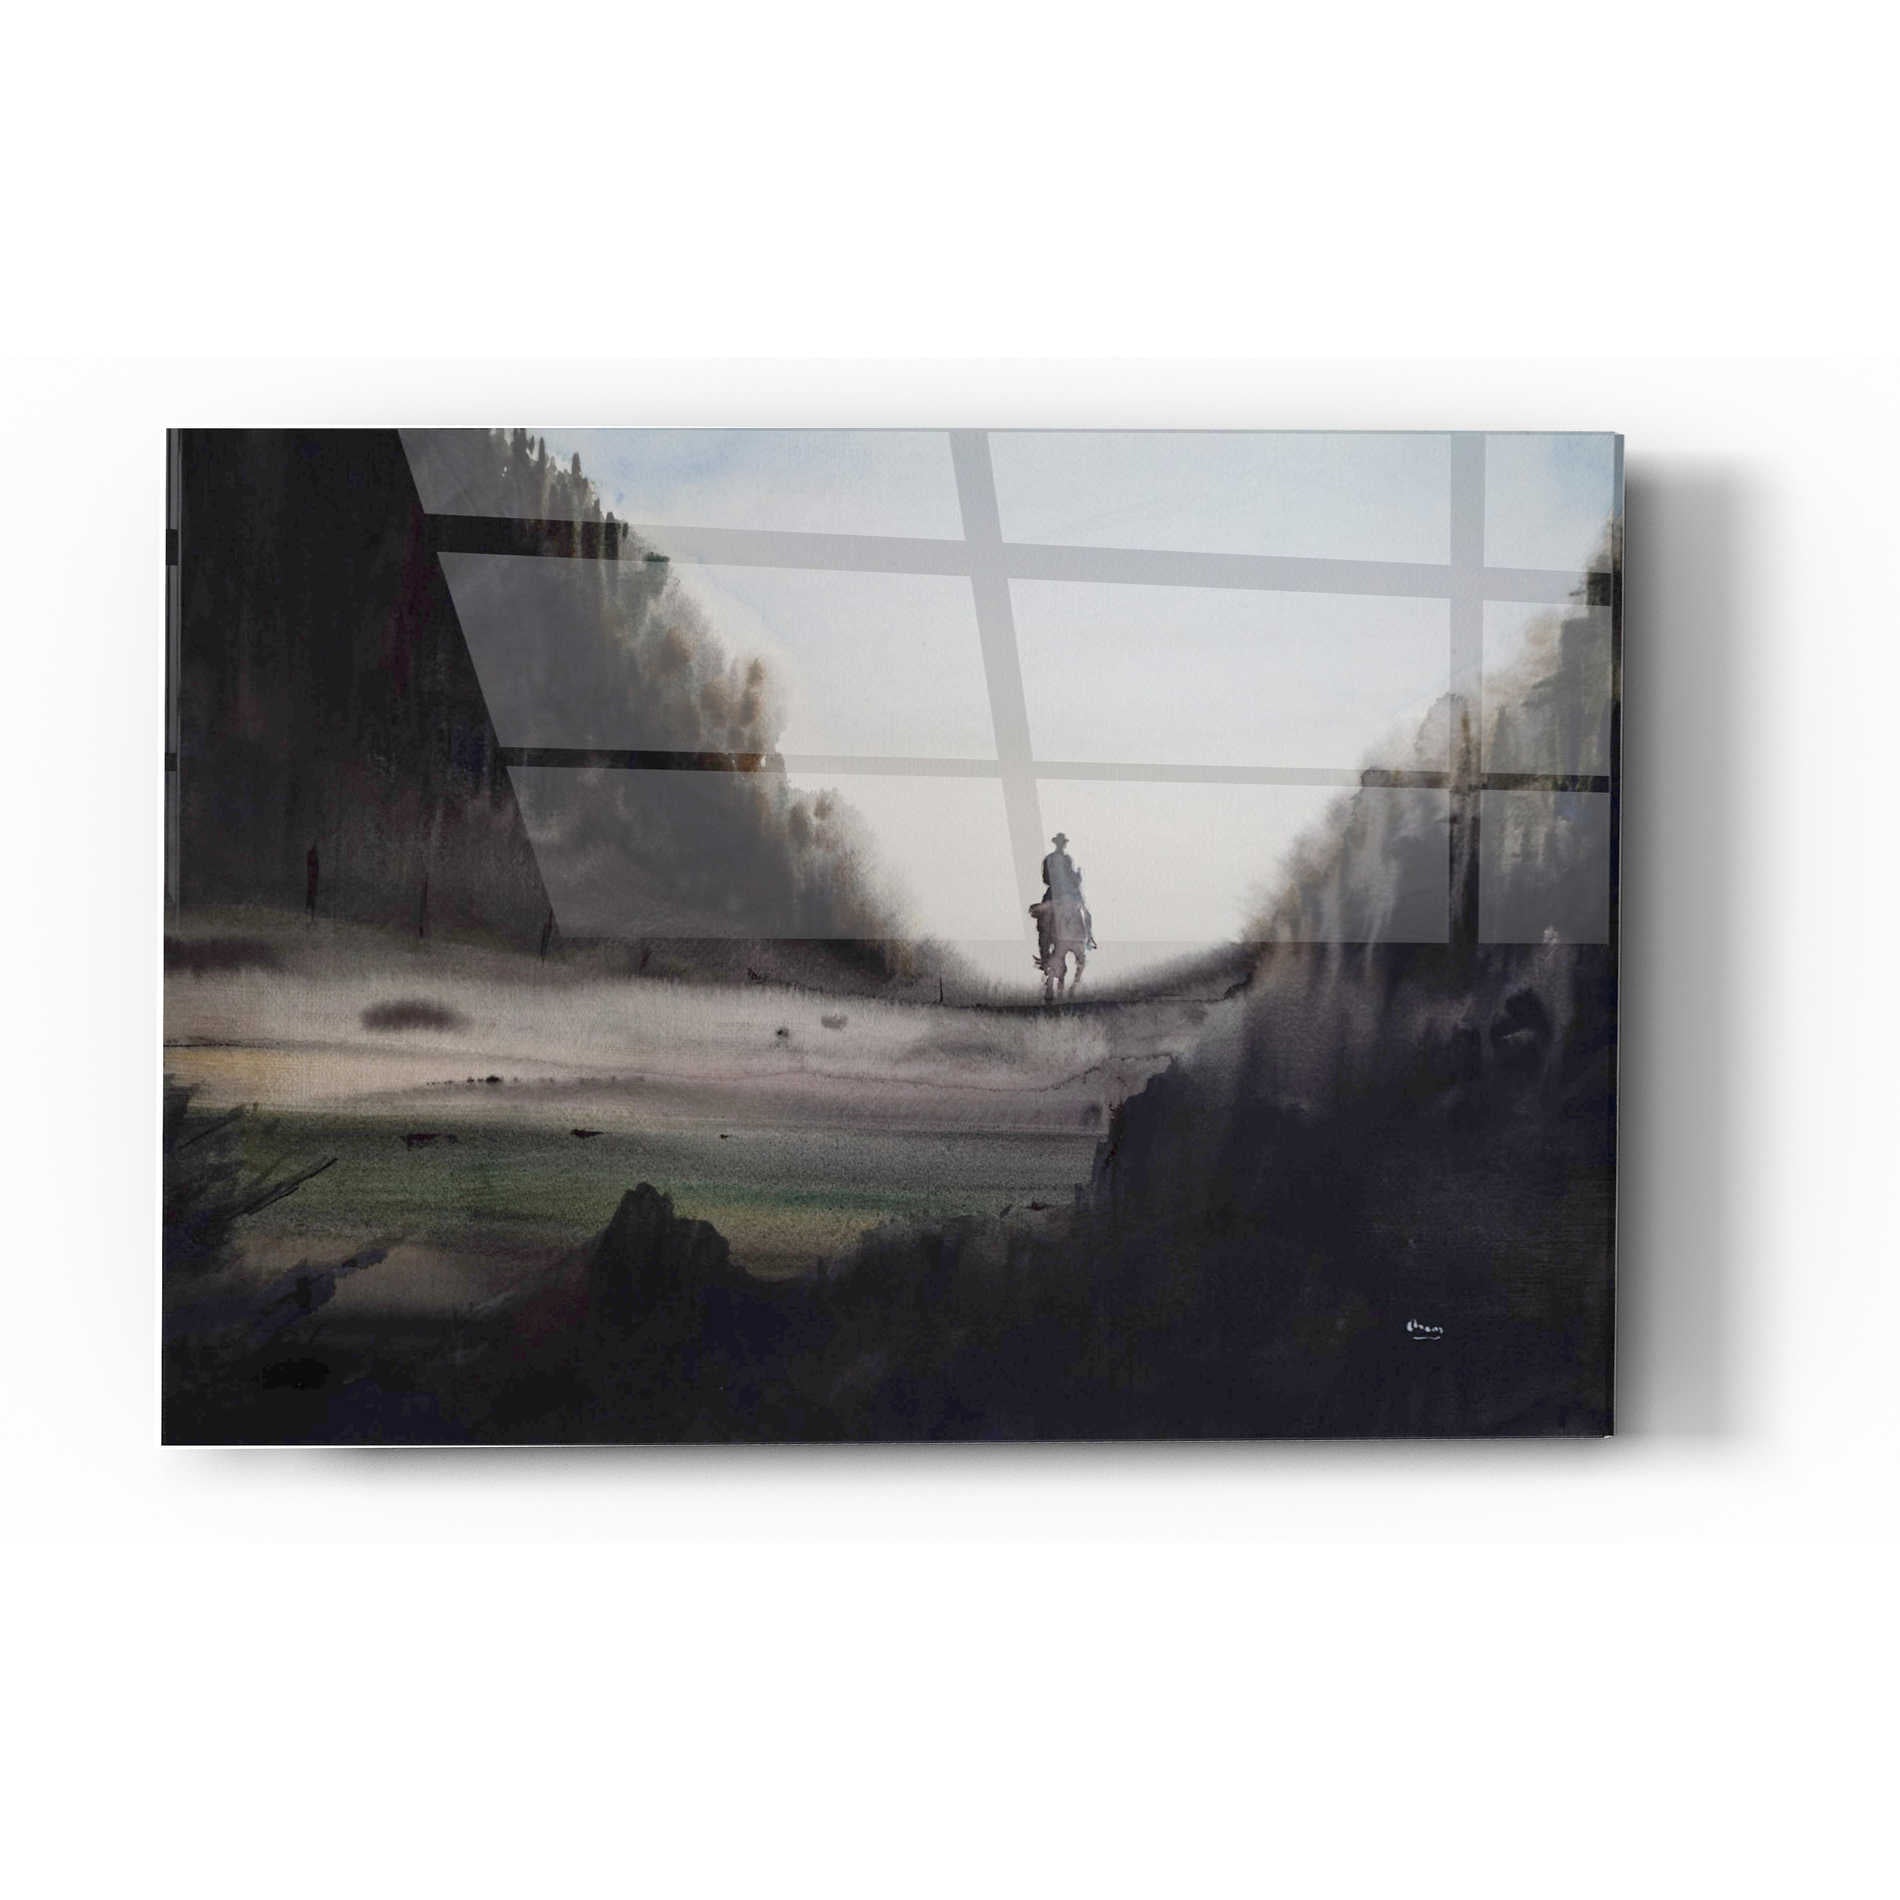 Epic Art 'Desolation' by Oscar Alvarez Pardo, Acrylic Glass Wall Art,16x24